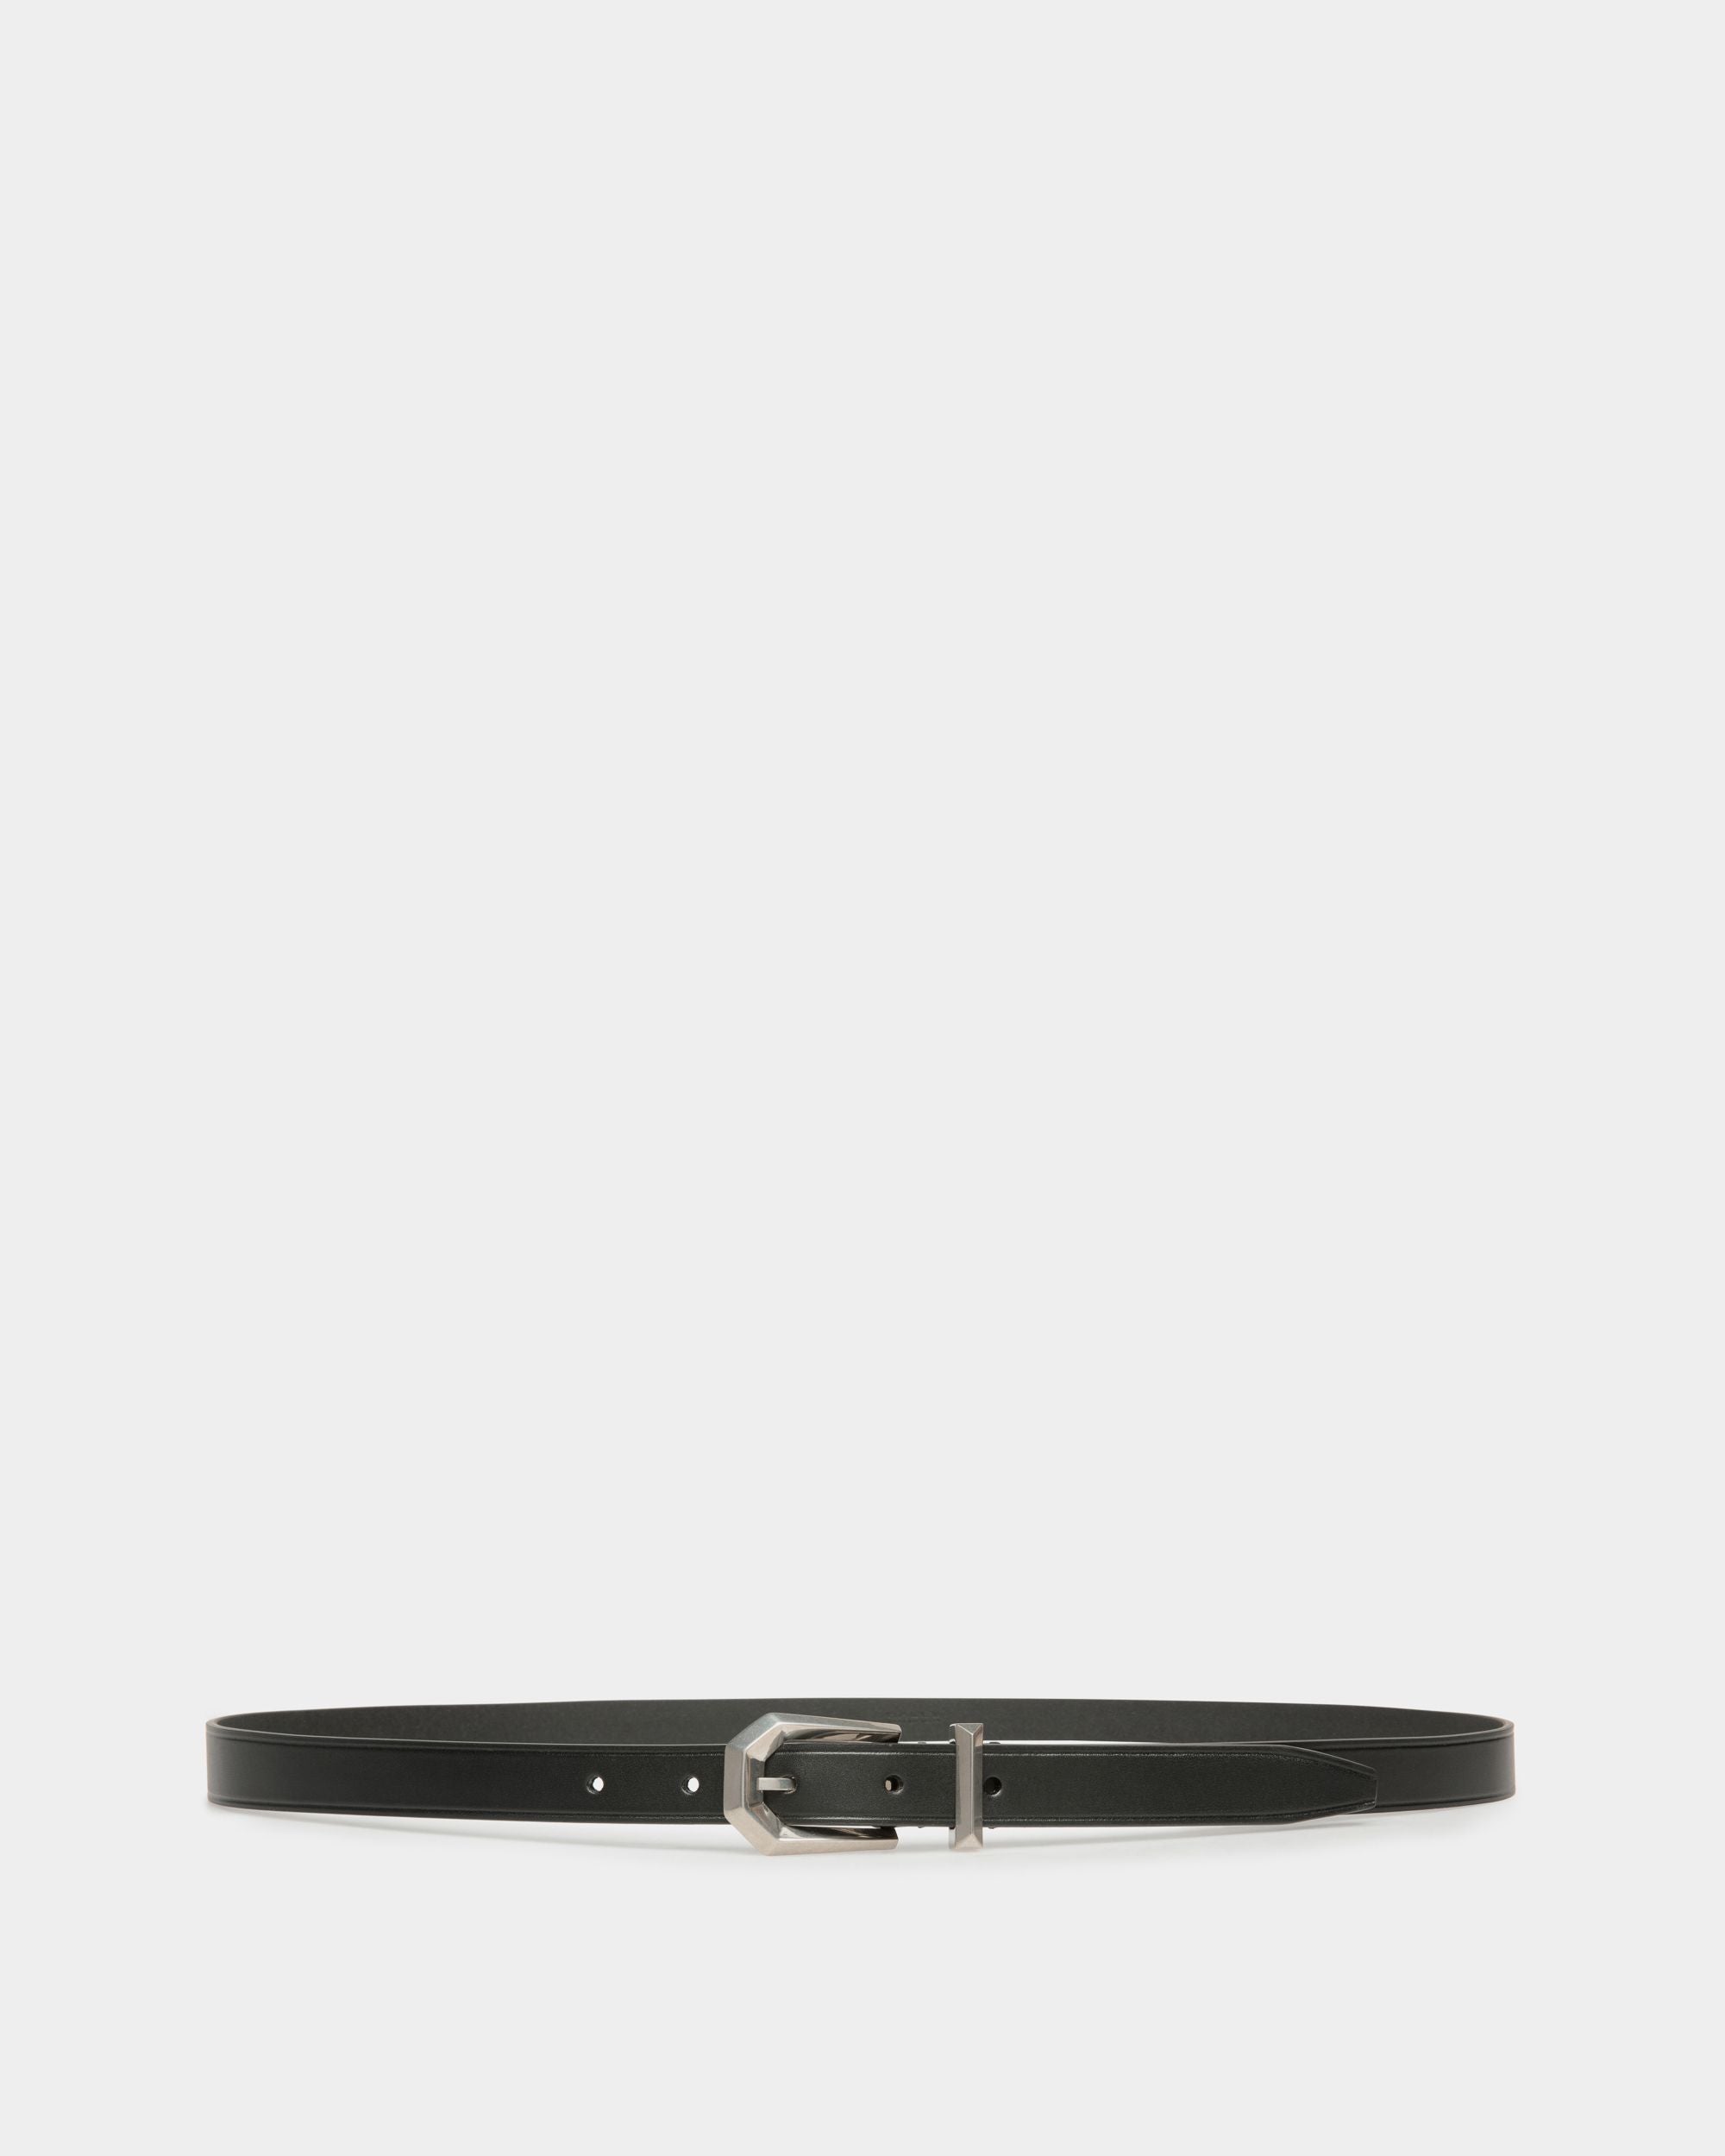 Men's Prisma 20mm Belt in Black Leather | Bally | Still Life Front